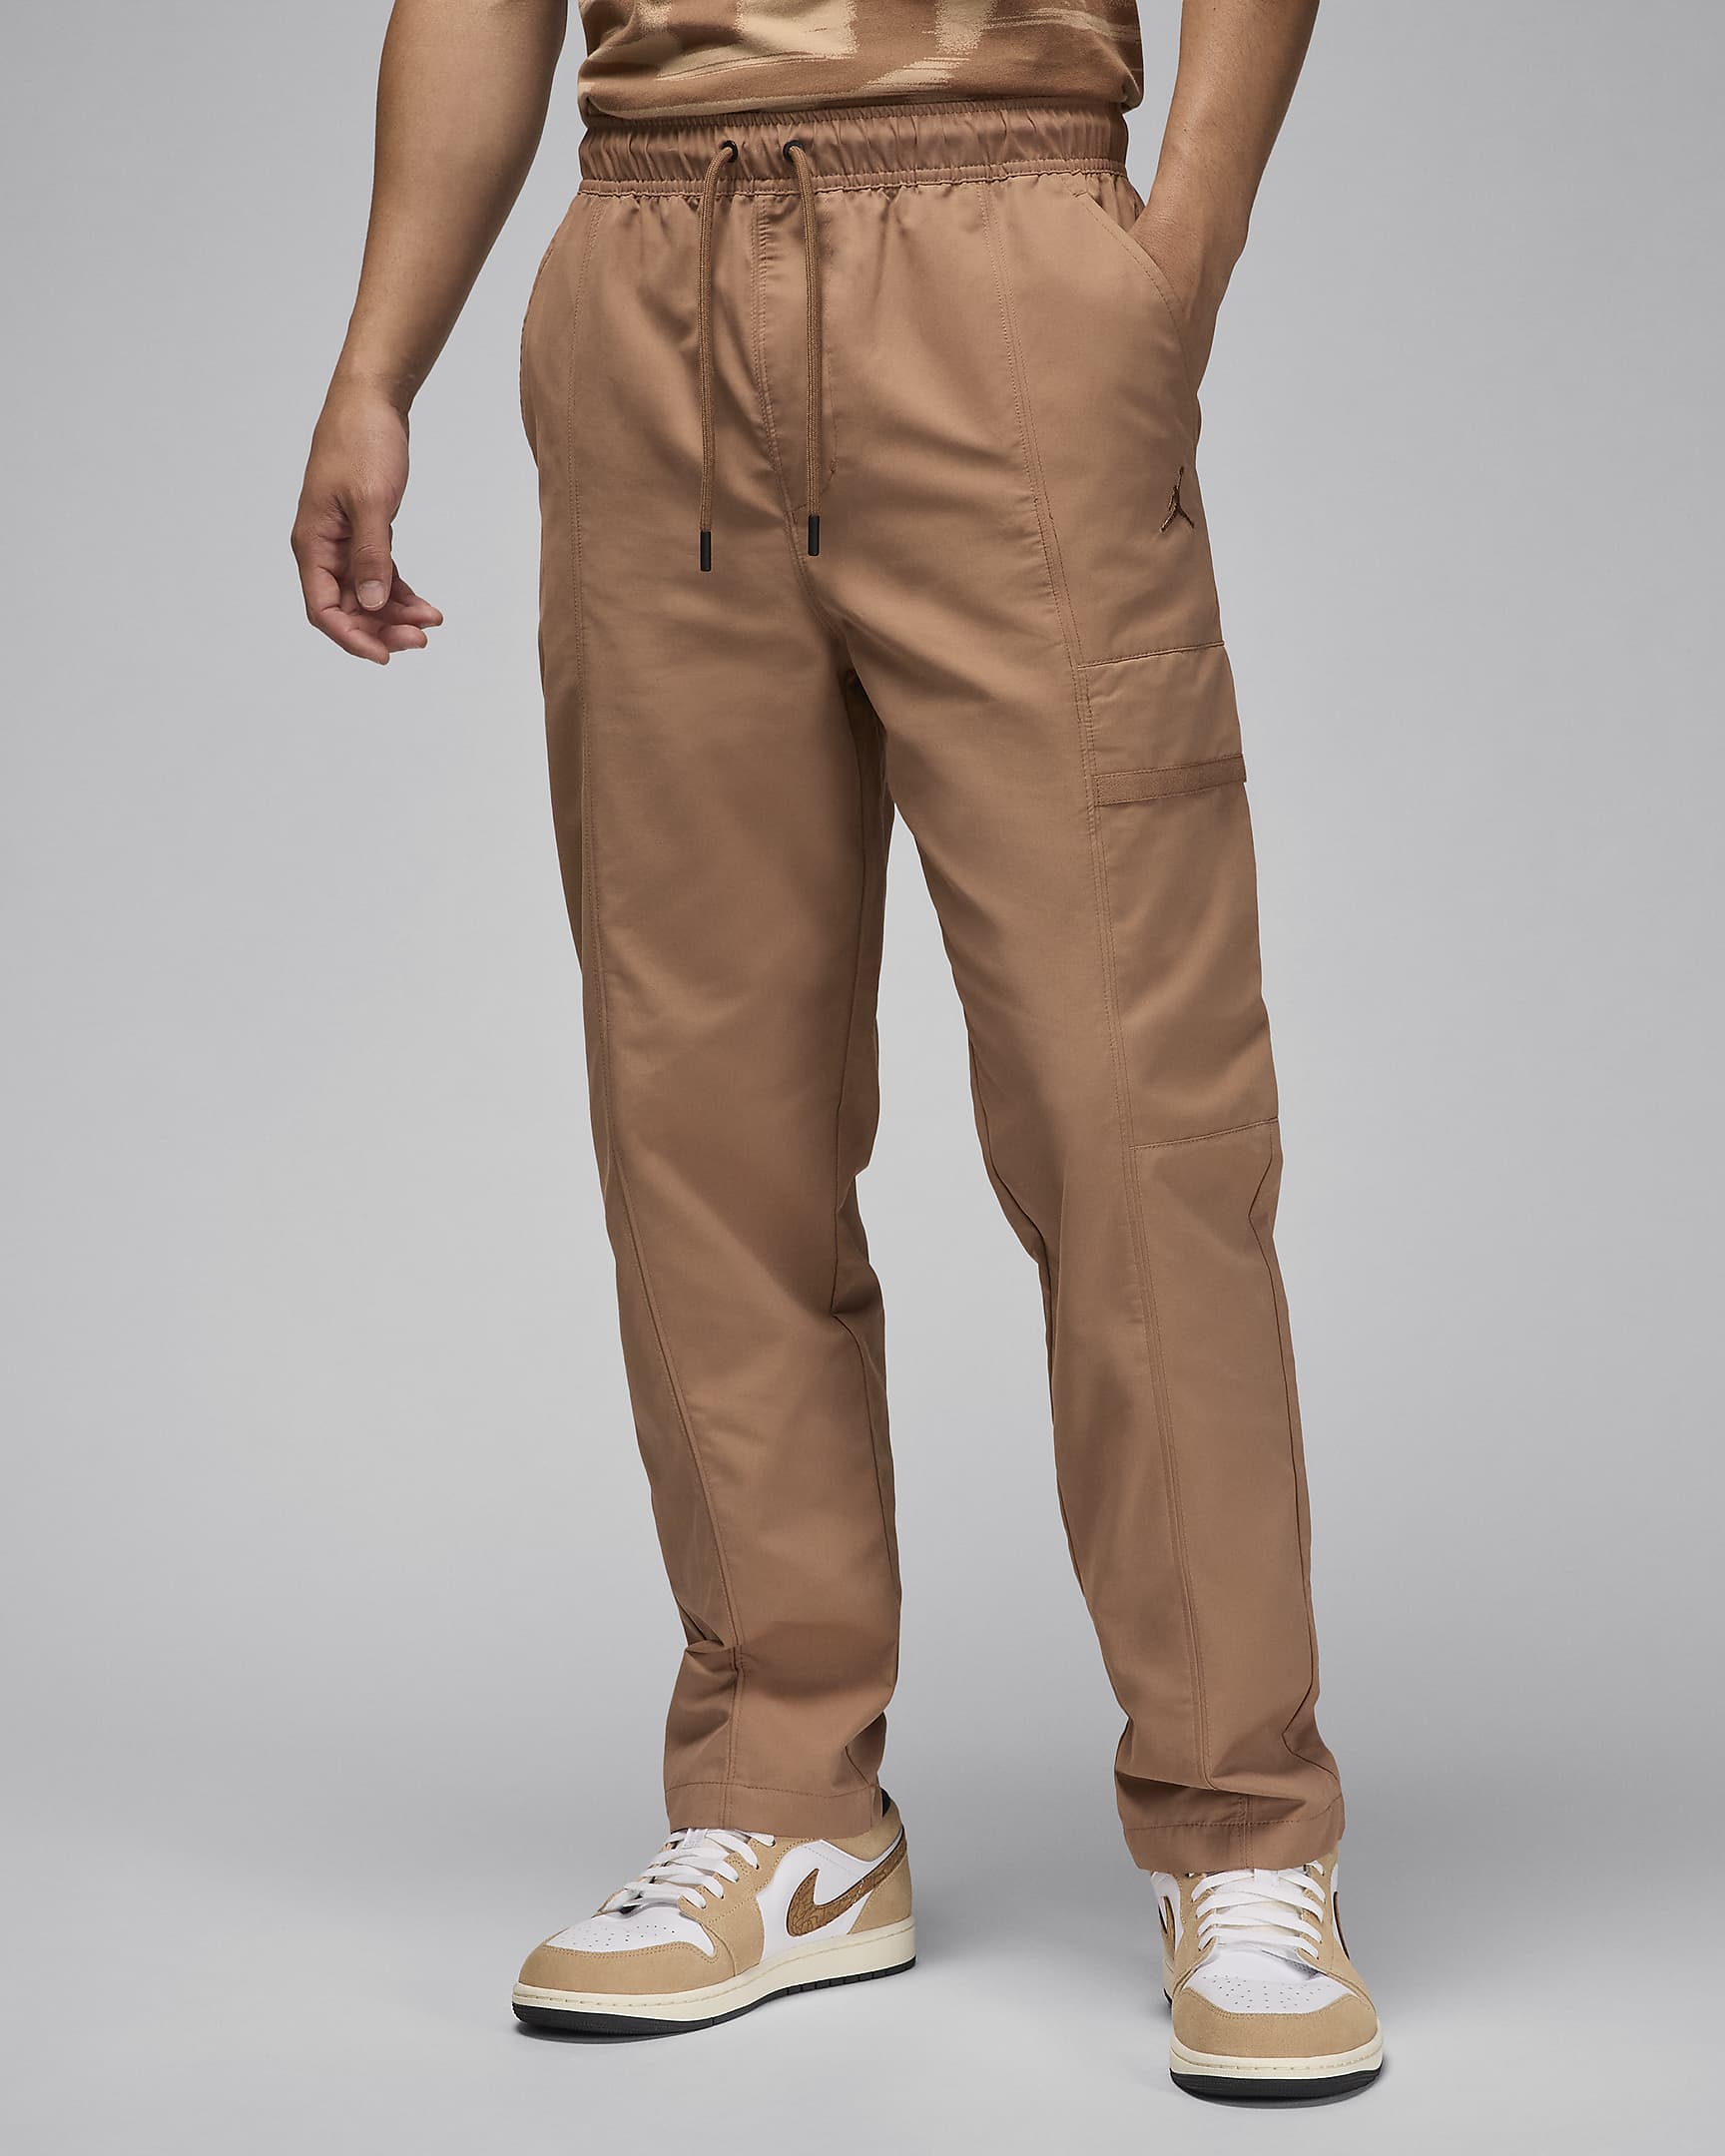 Jordan Essentials Men's Woven Pants - Archaeo Brown/Archaeo Brown